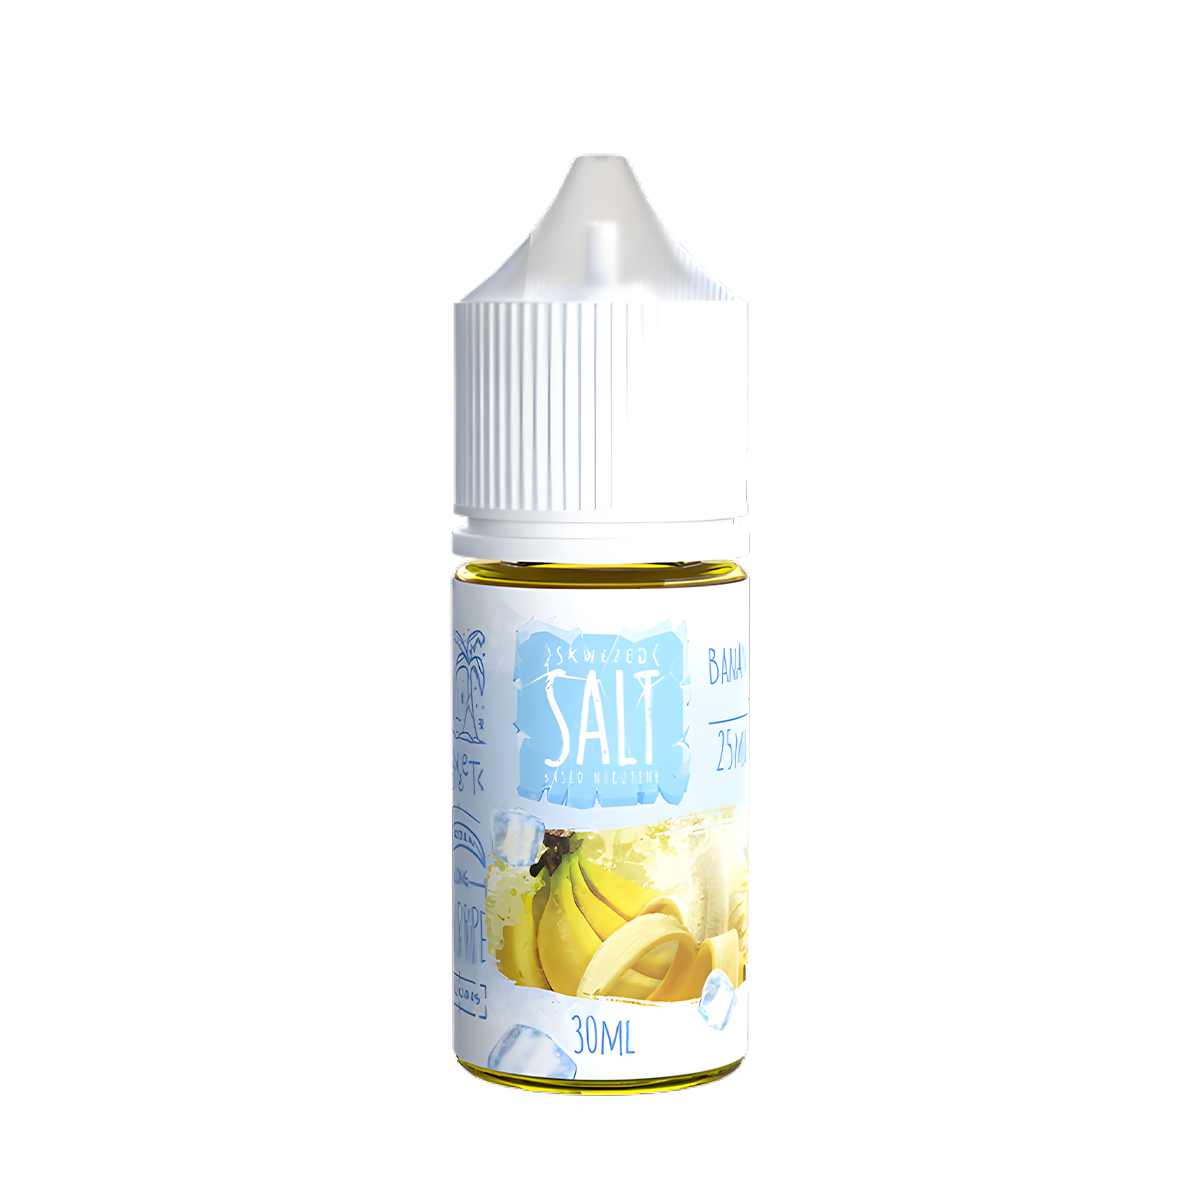 Skwezed Iced Salt Nicotine Vape Juice 25 Mg 30 Ml Banana Iced